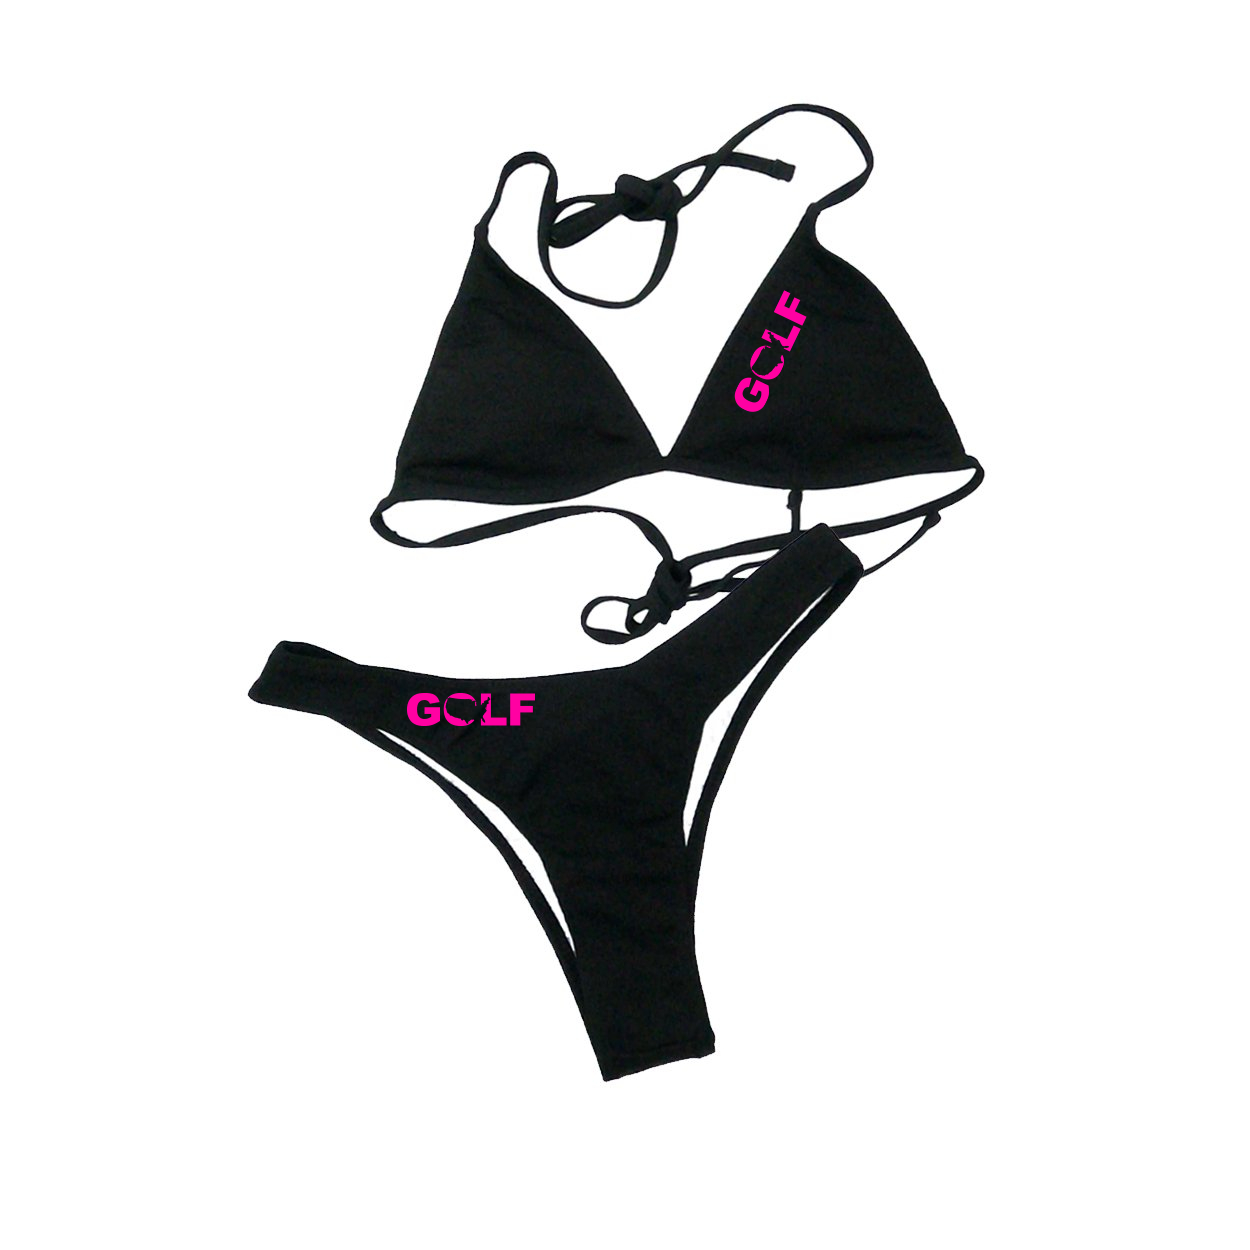 Golf United States Classic Womens Padded Halter Triangle Two-Piece Swimsuit Basics Bikini Black (Pink Logo)